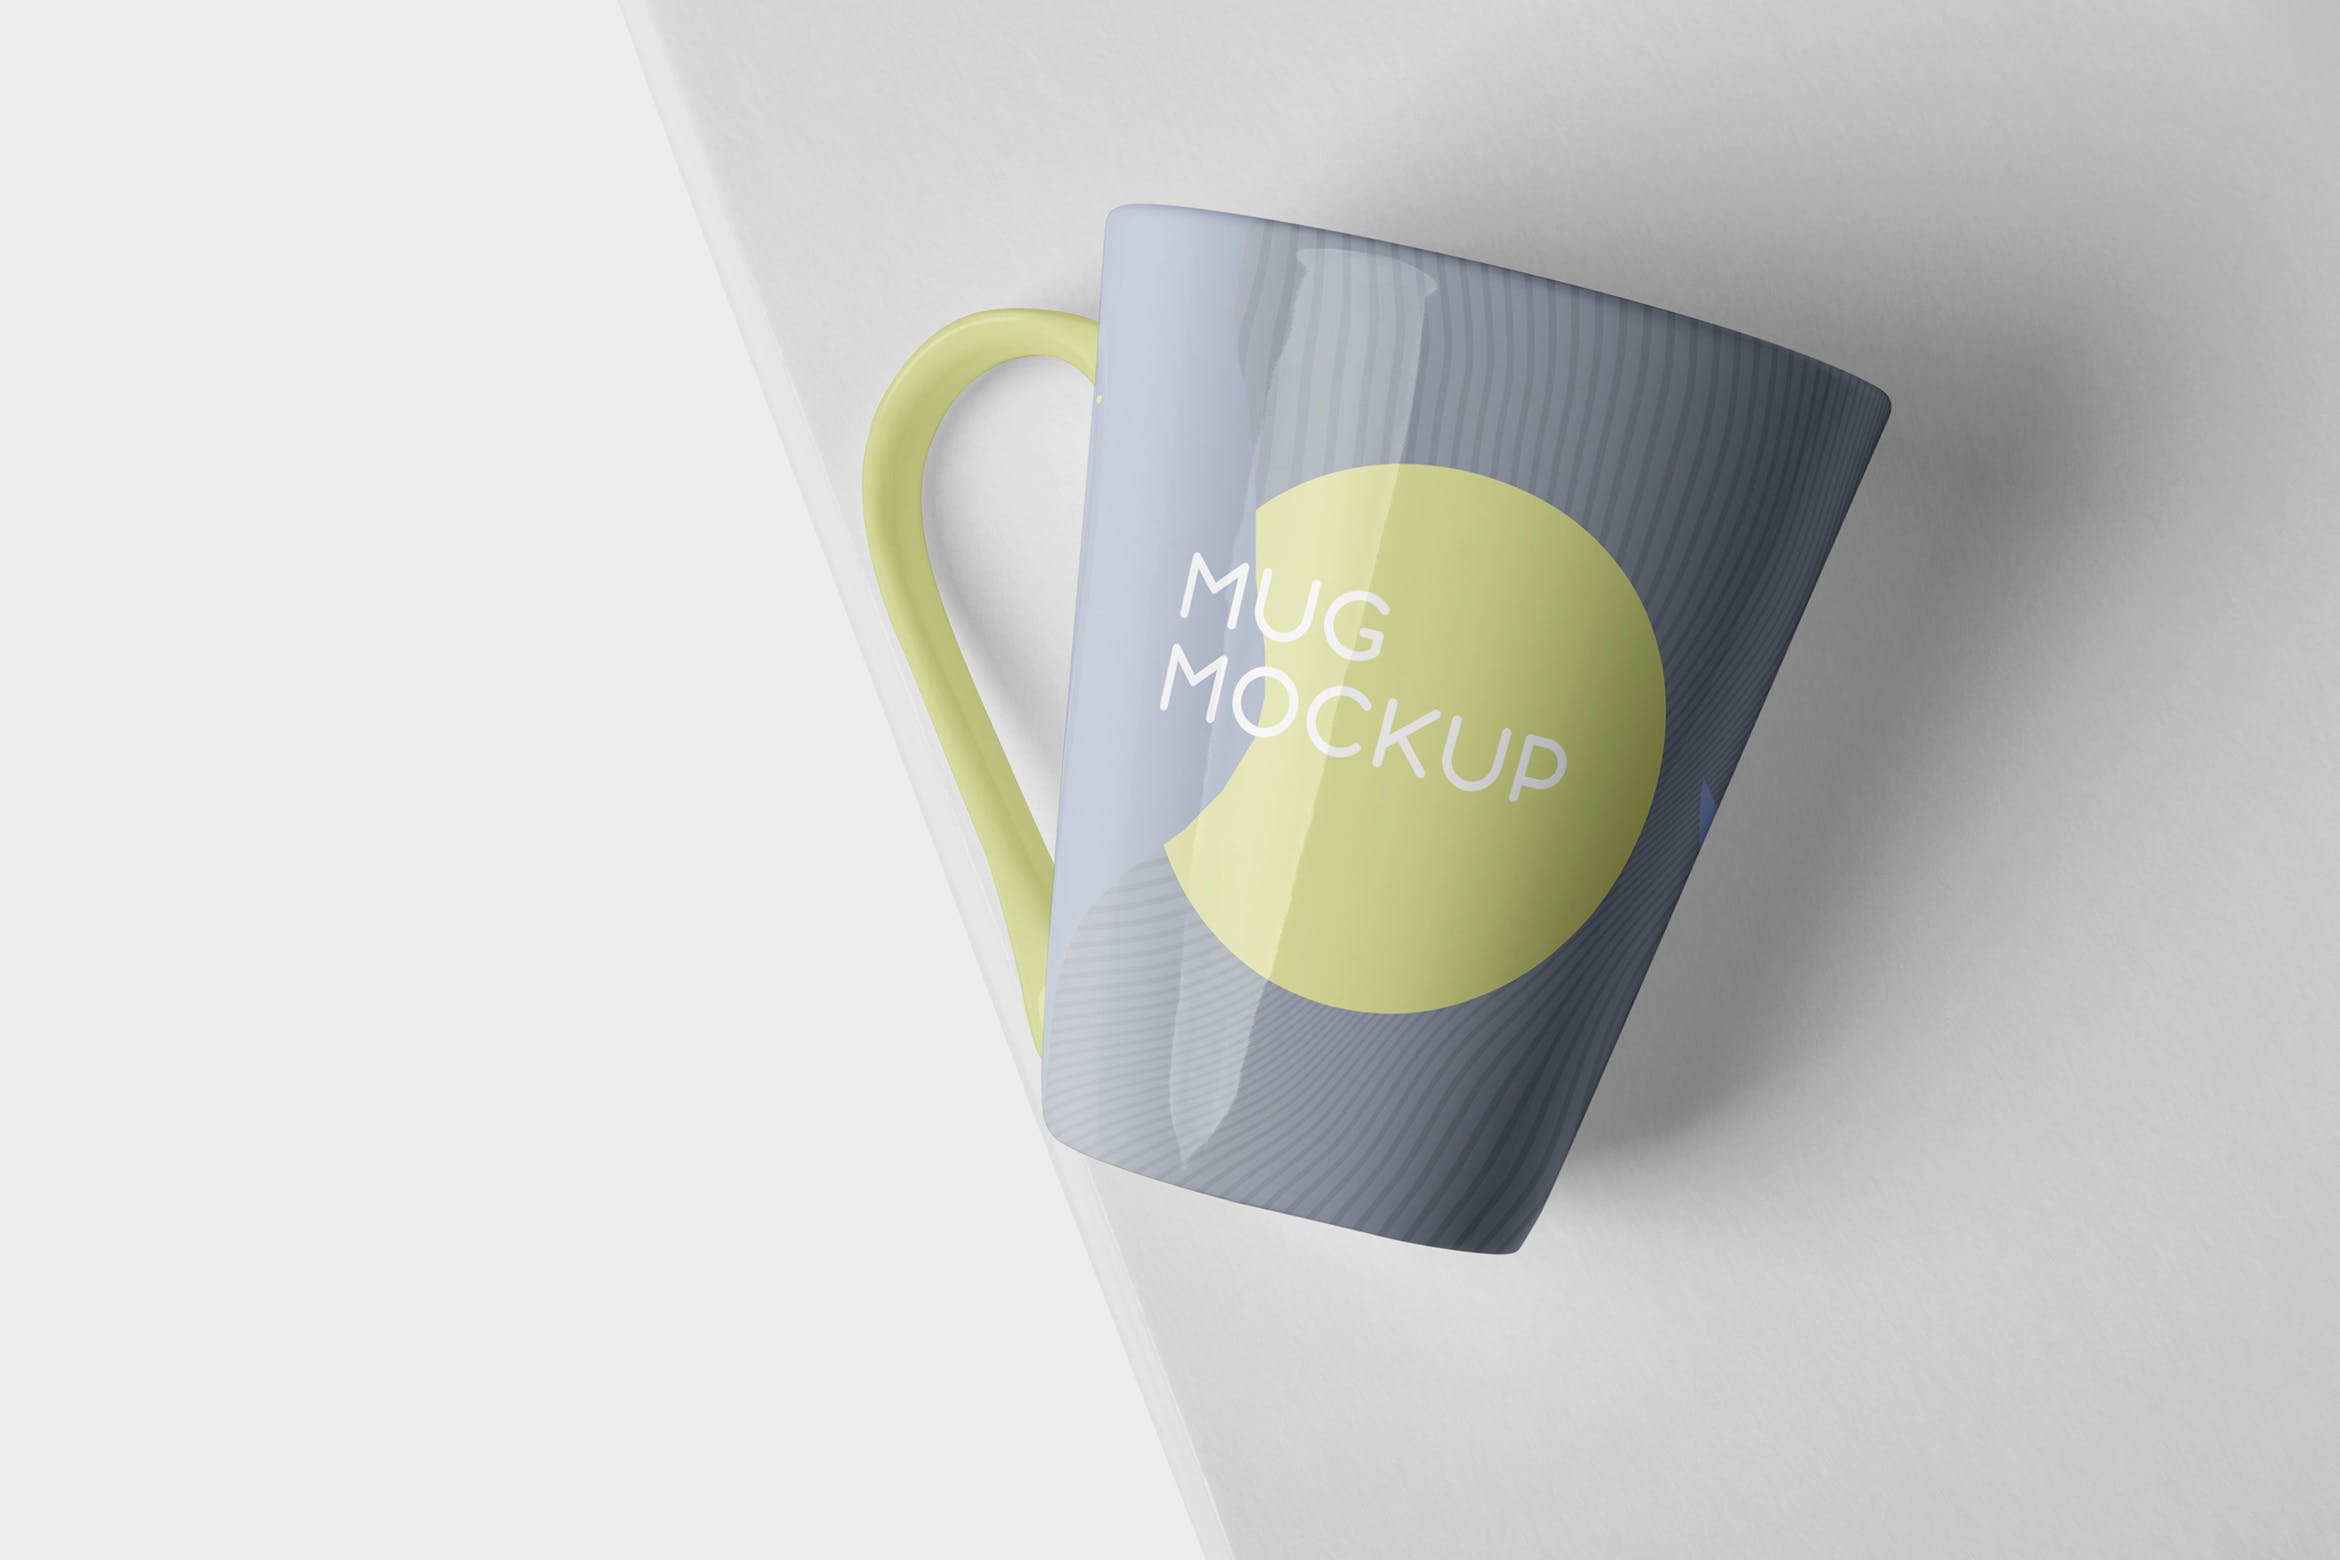 锥形马克杯图案设计普贤居精选 Mug Mockup – Cone Shaped插图